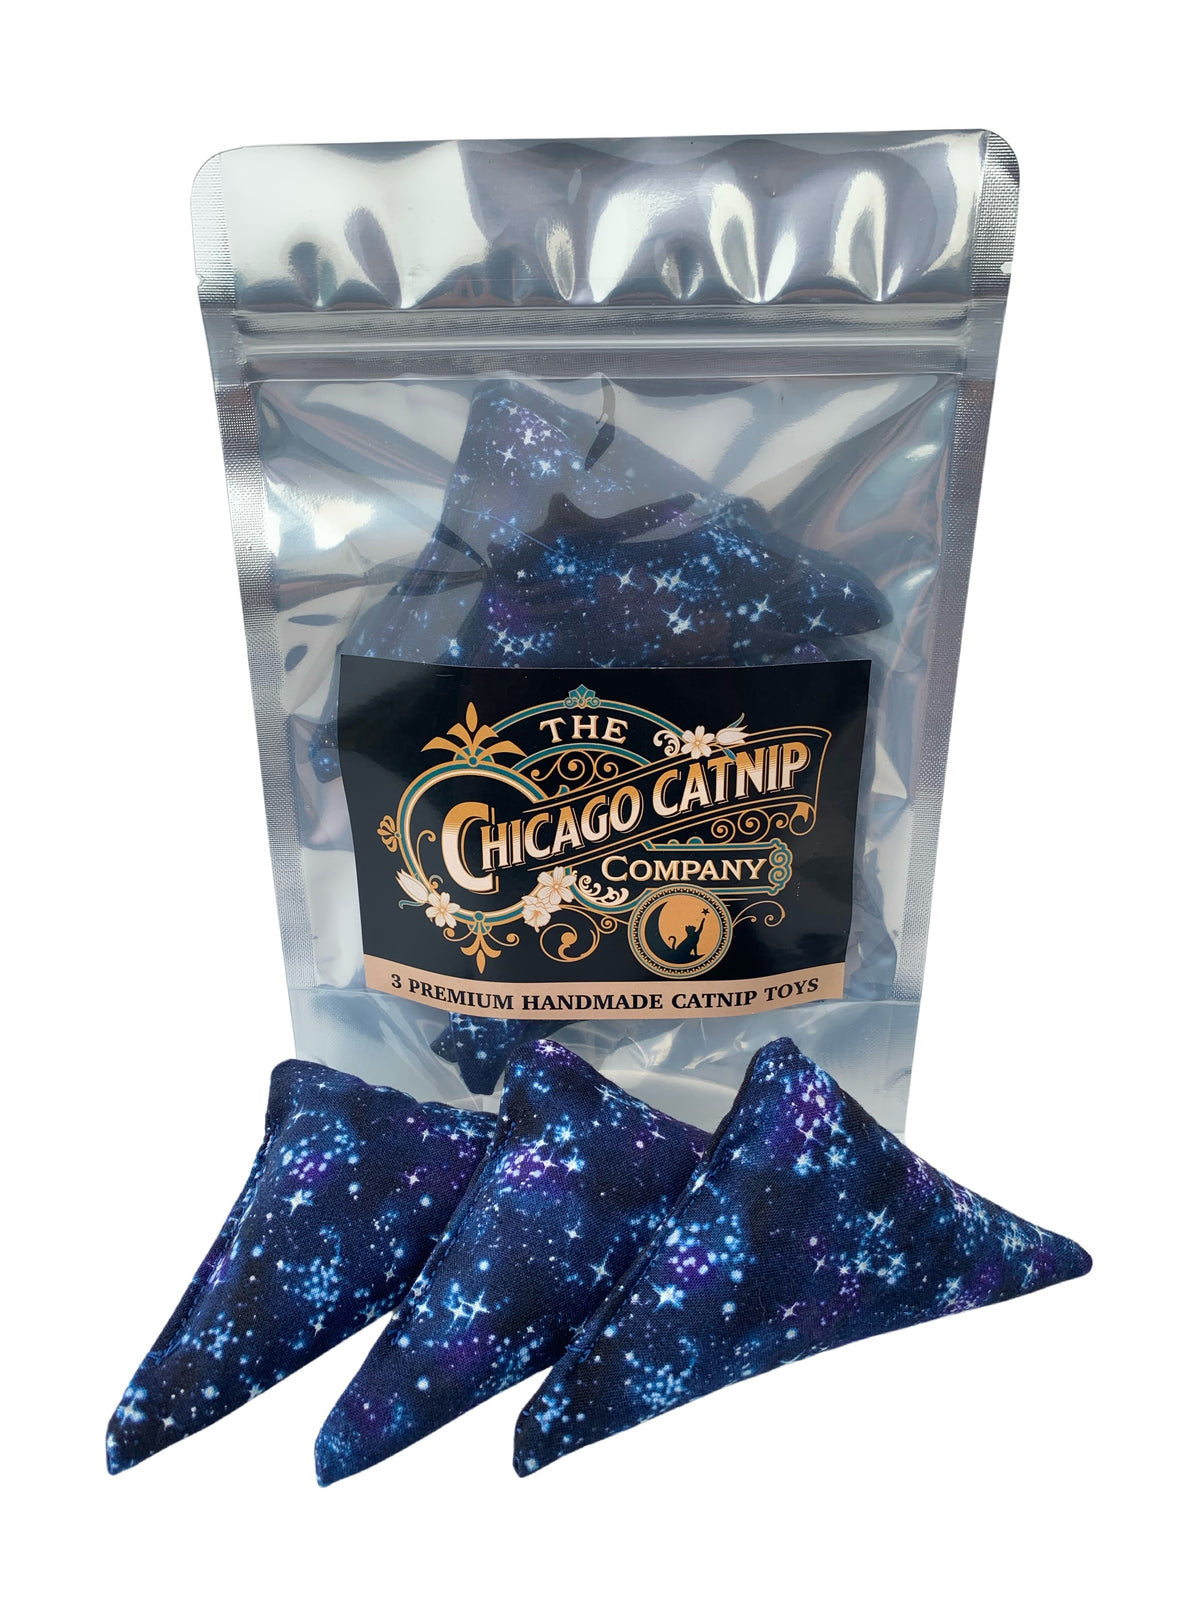 Space Edition 3 Premium Handmade Catnip Triangles in Foil Pouch